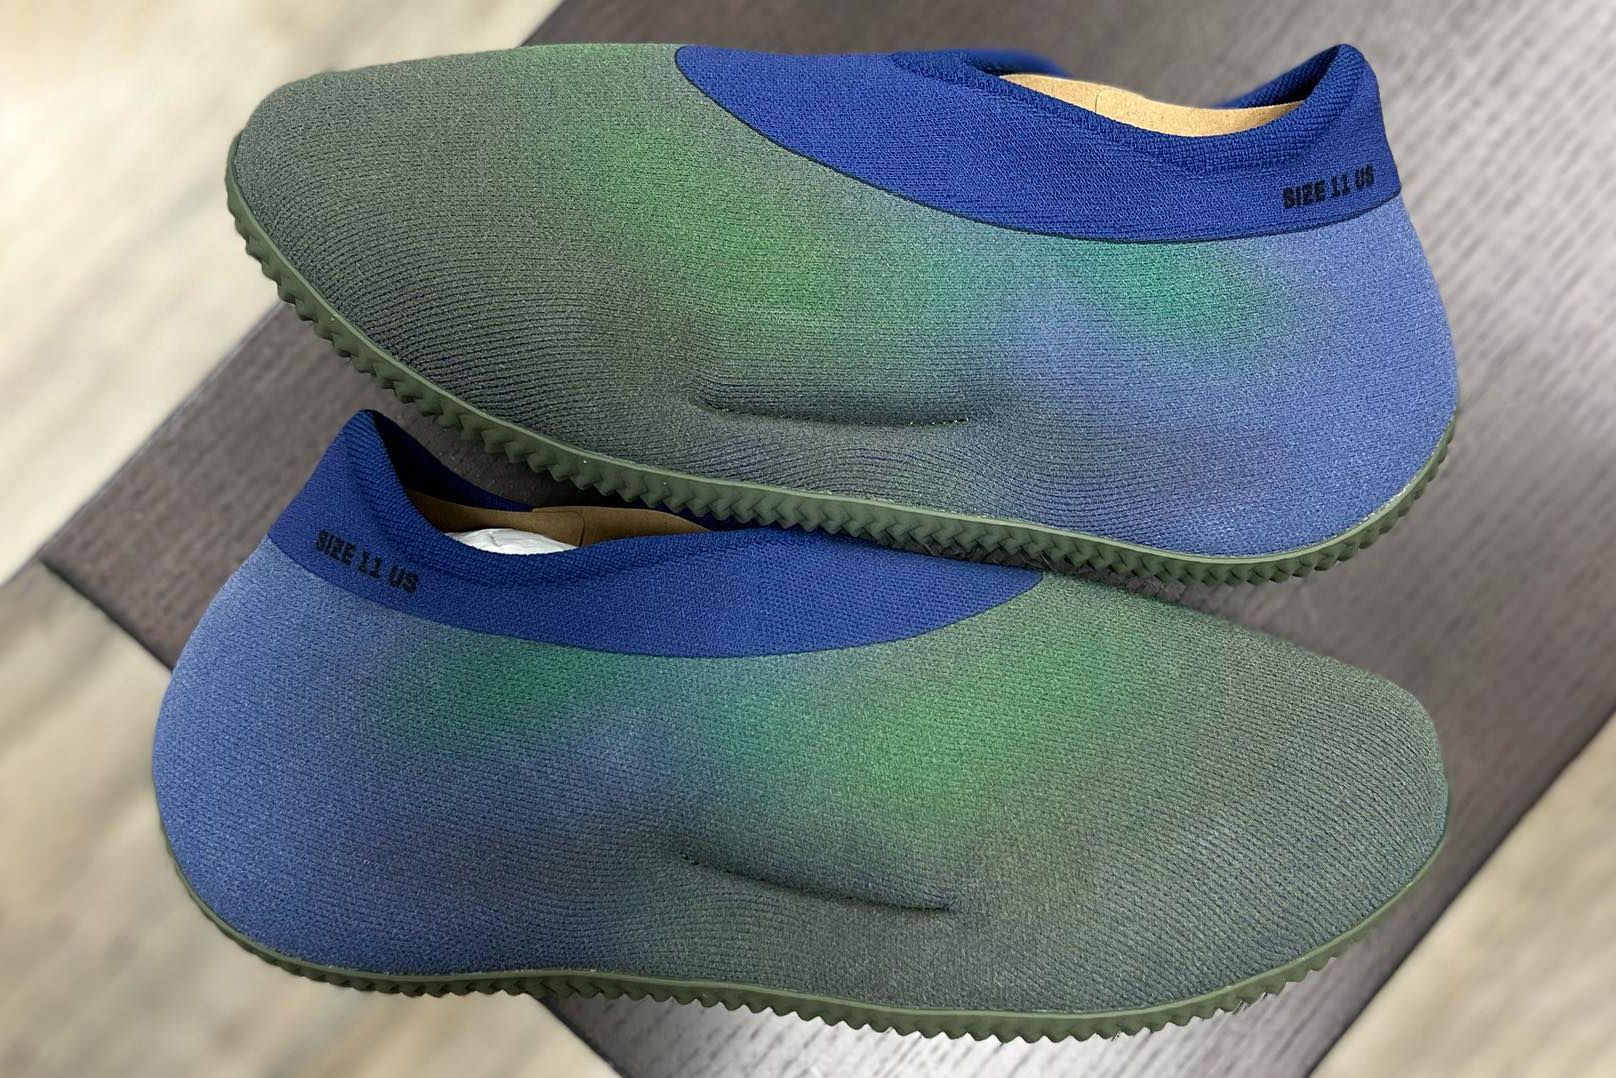 adidas Yeezy Knit Runner 'Faded Azure'